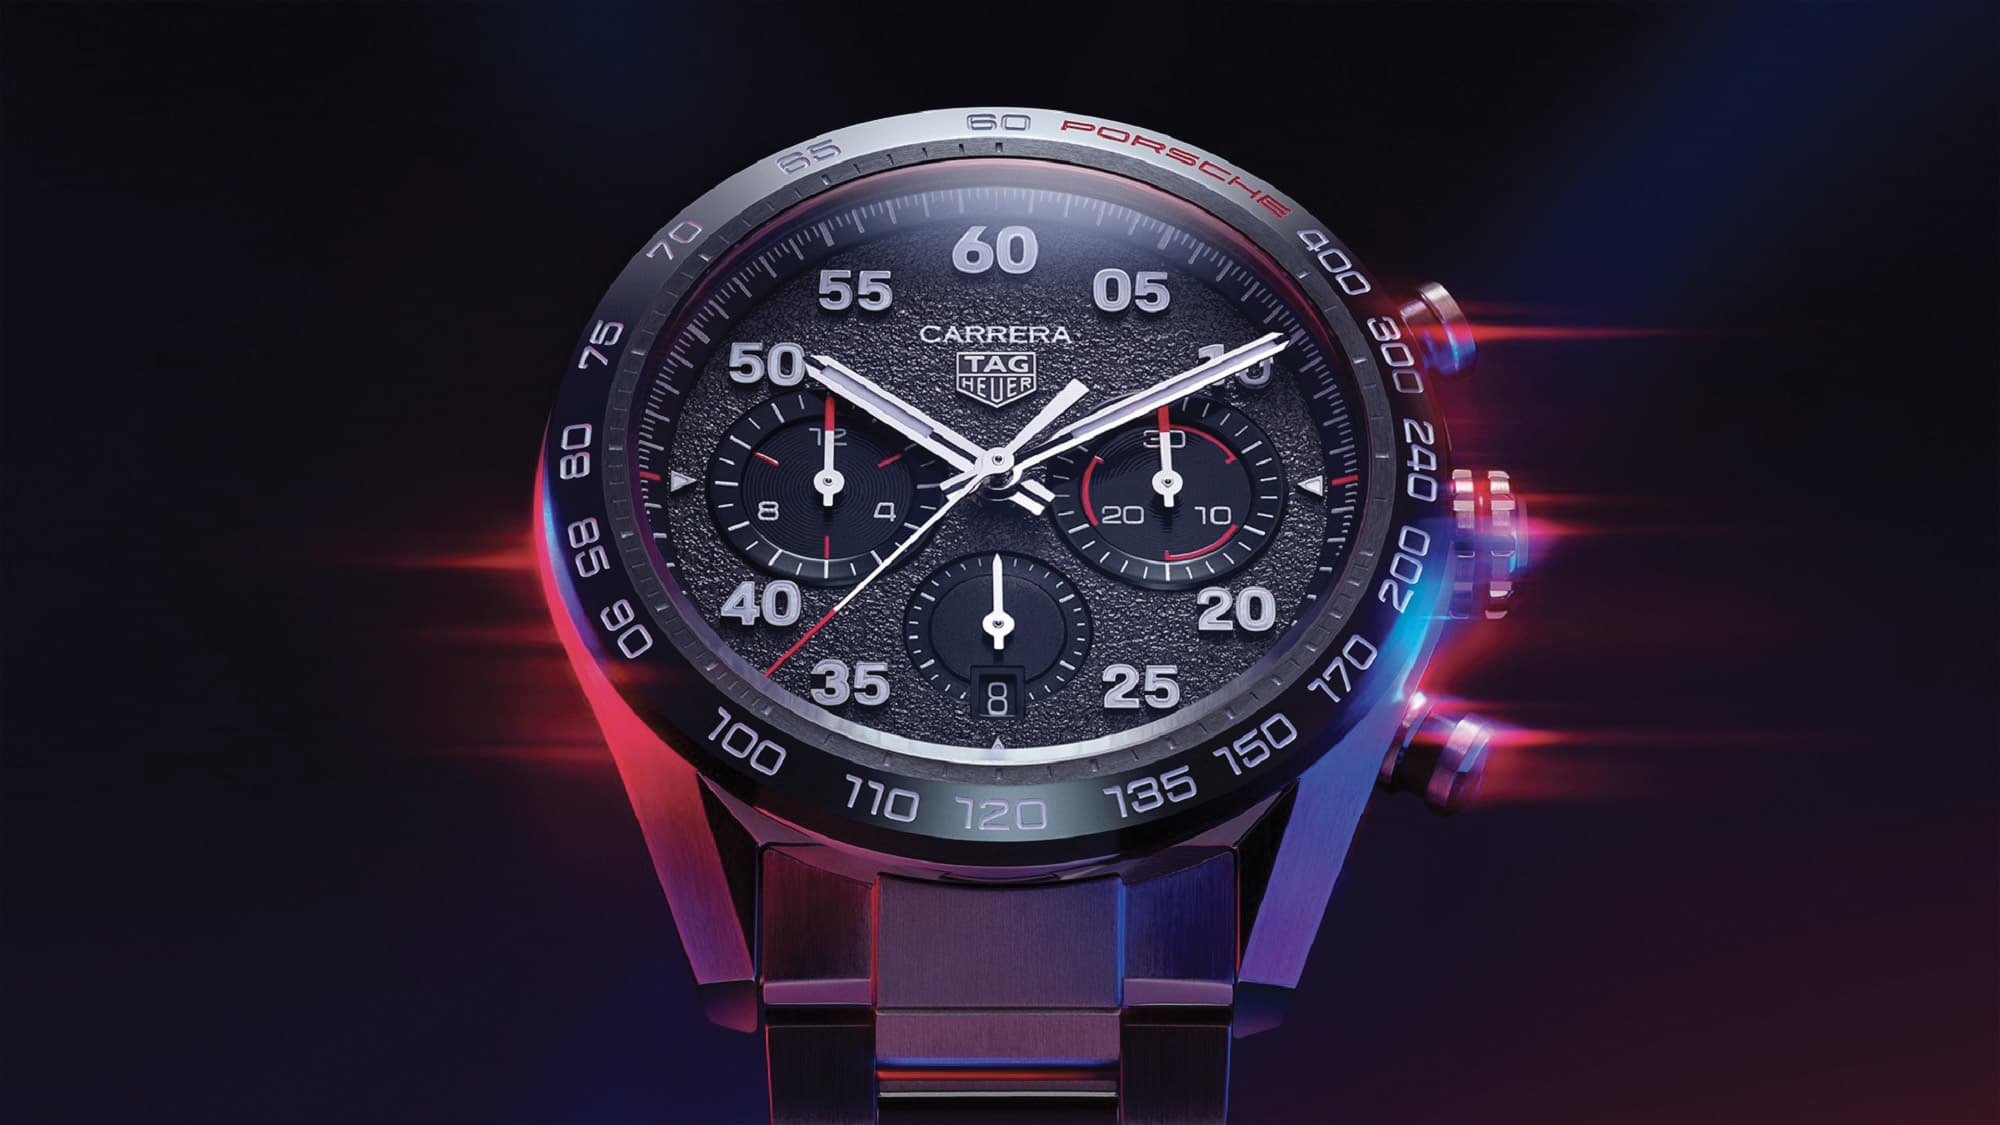 Orologio TAG Heuer Carrera Porsche Chronograph